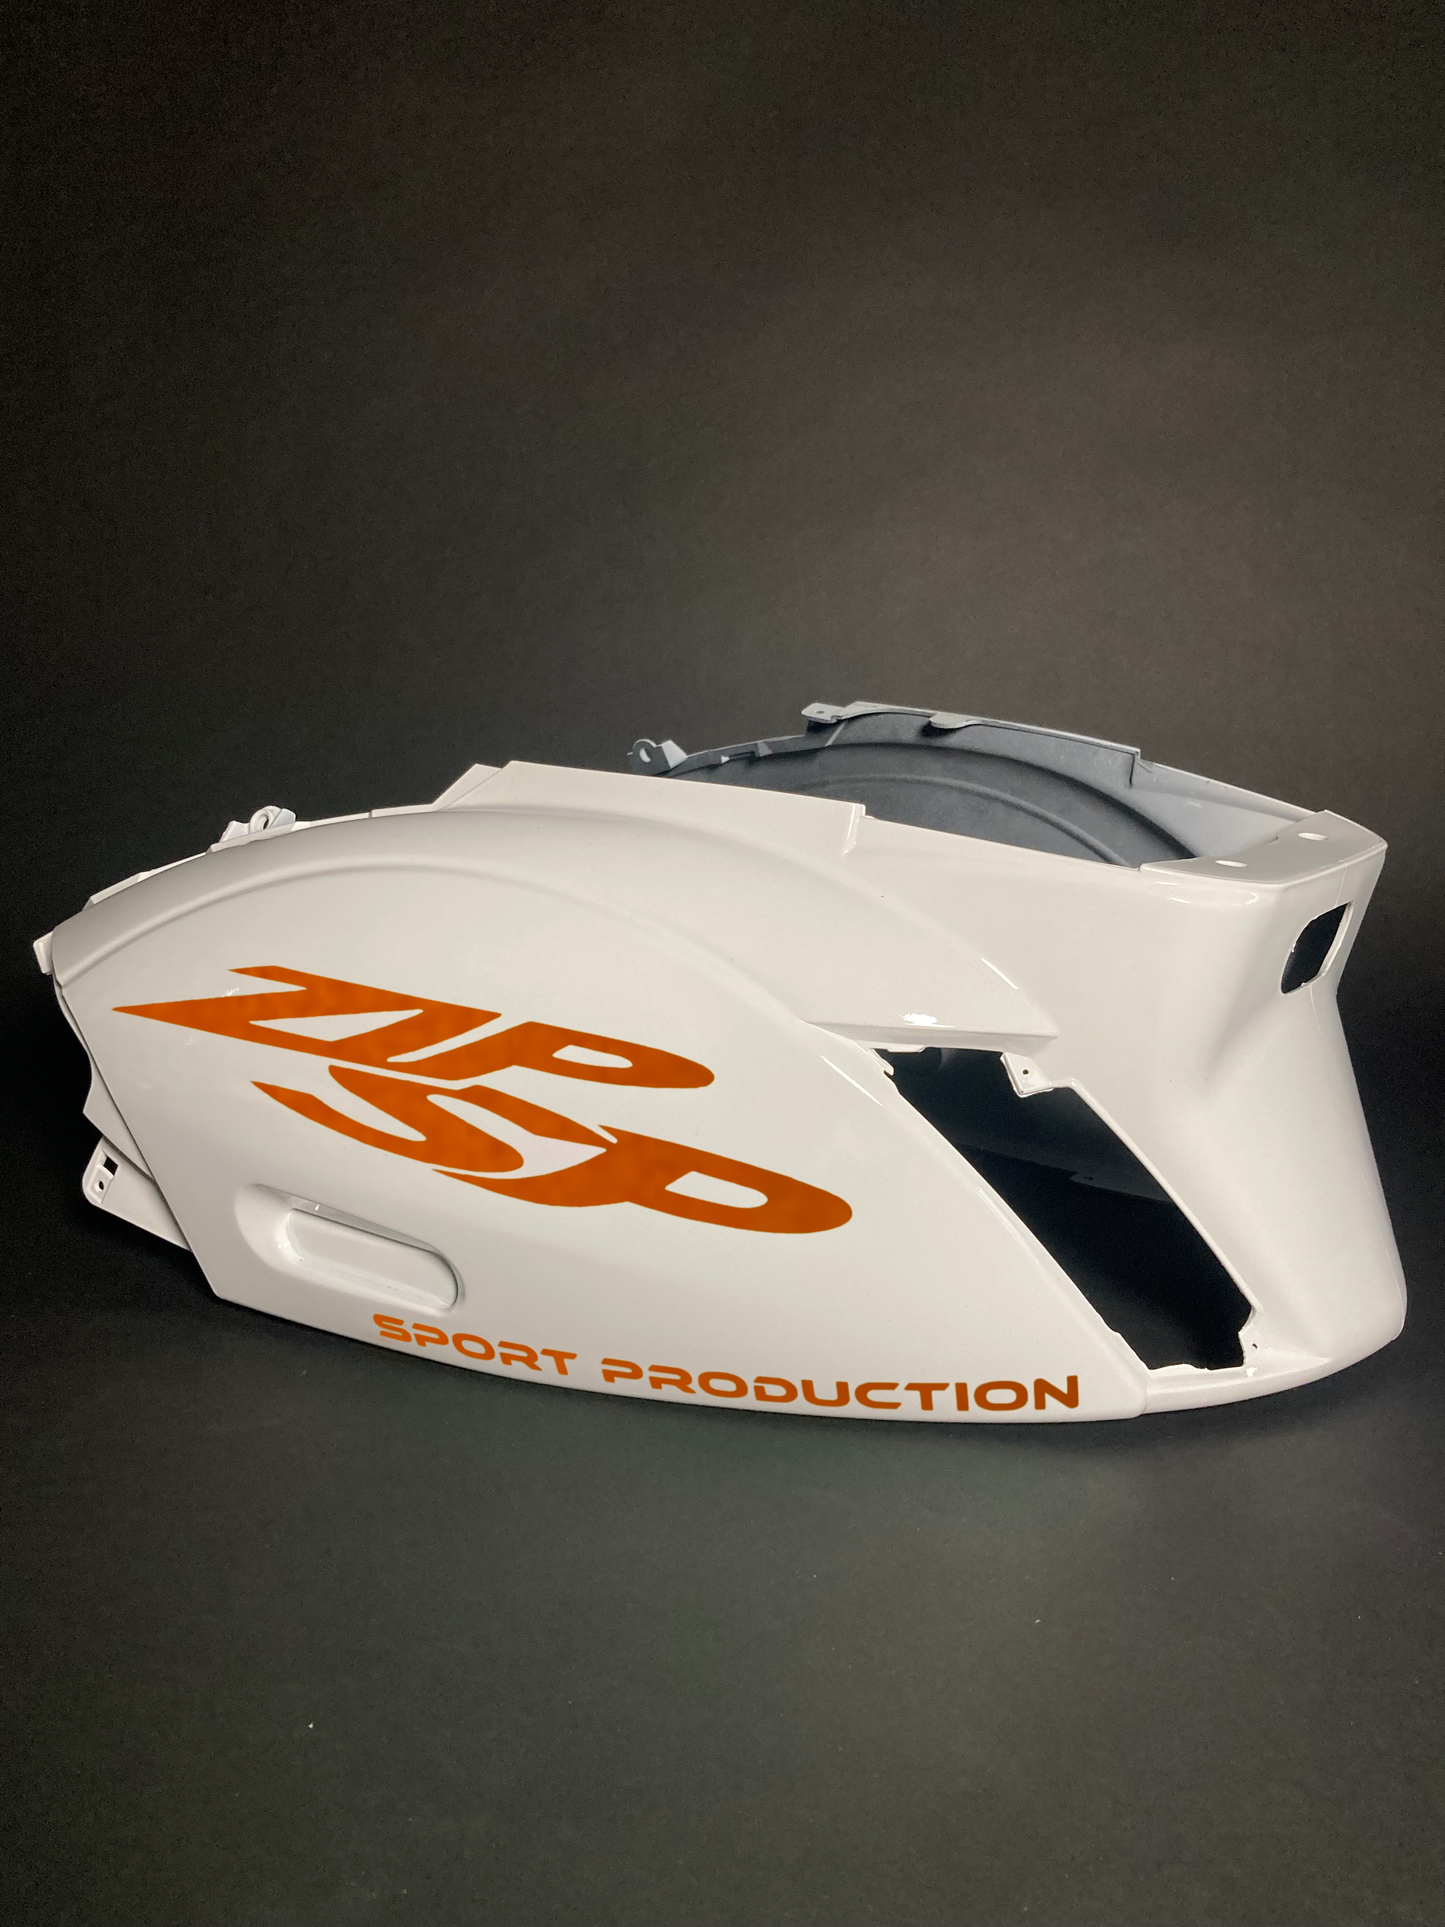 Zip Sports Production | Reflective Orange